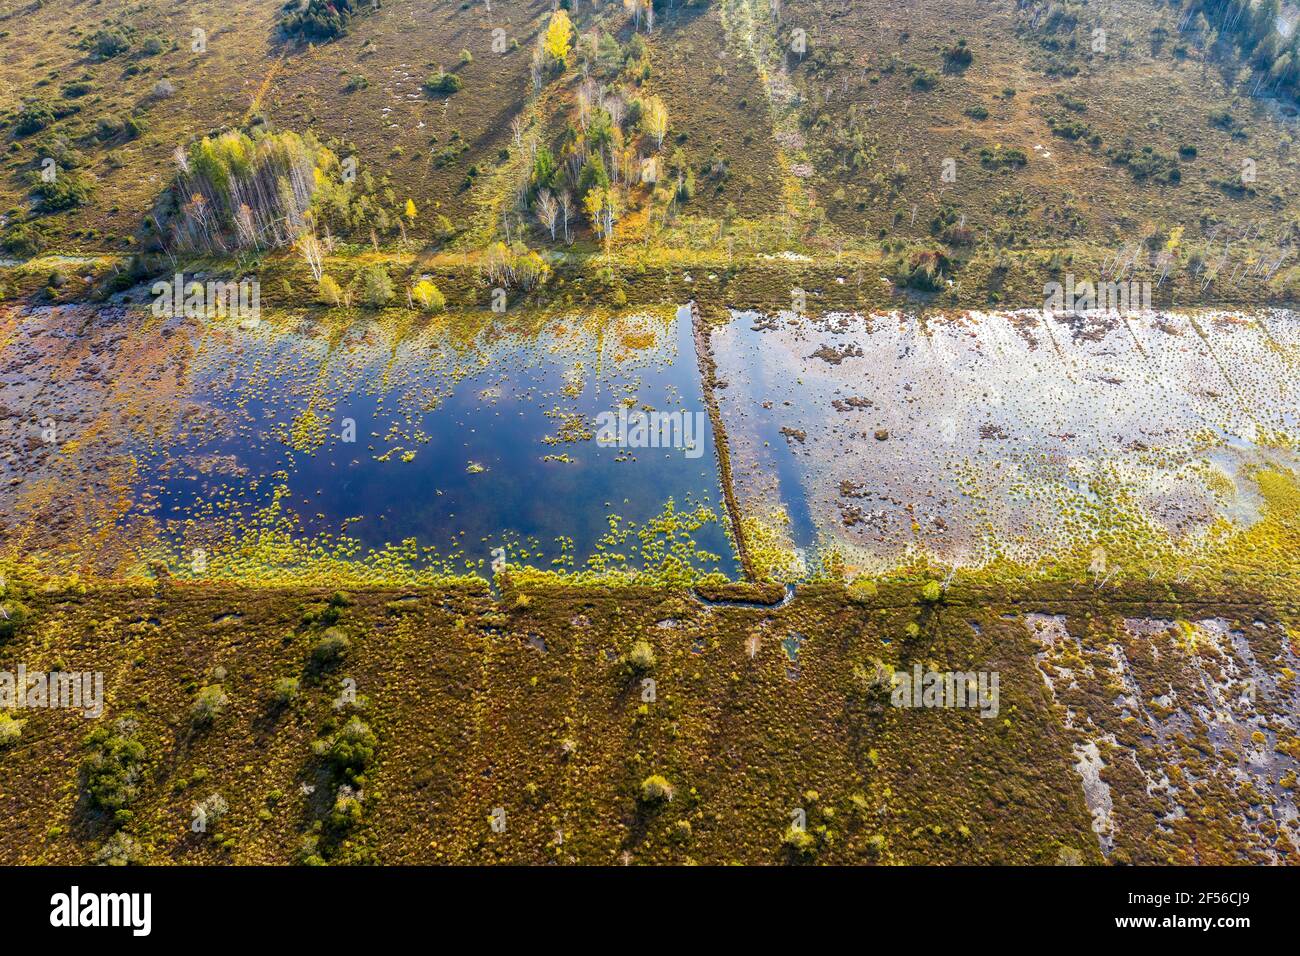 Germany, Bavaria, Konigsdorf, Aerial view of wetland Stock Photo